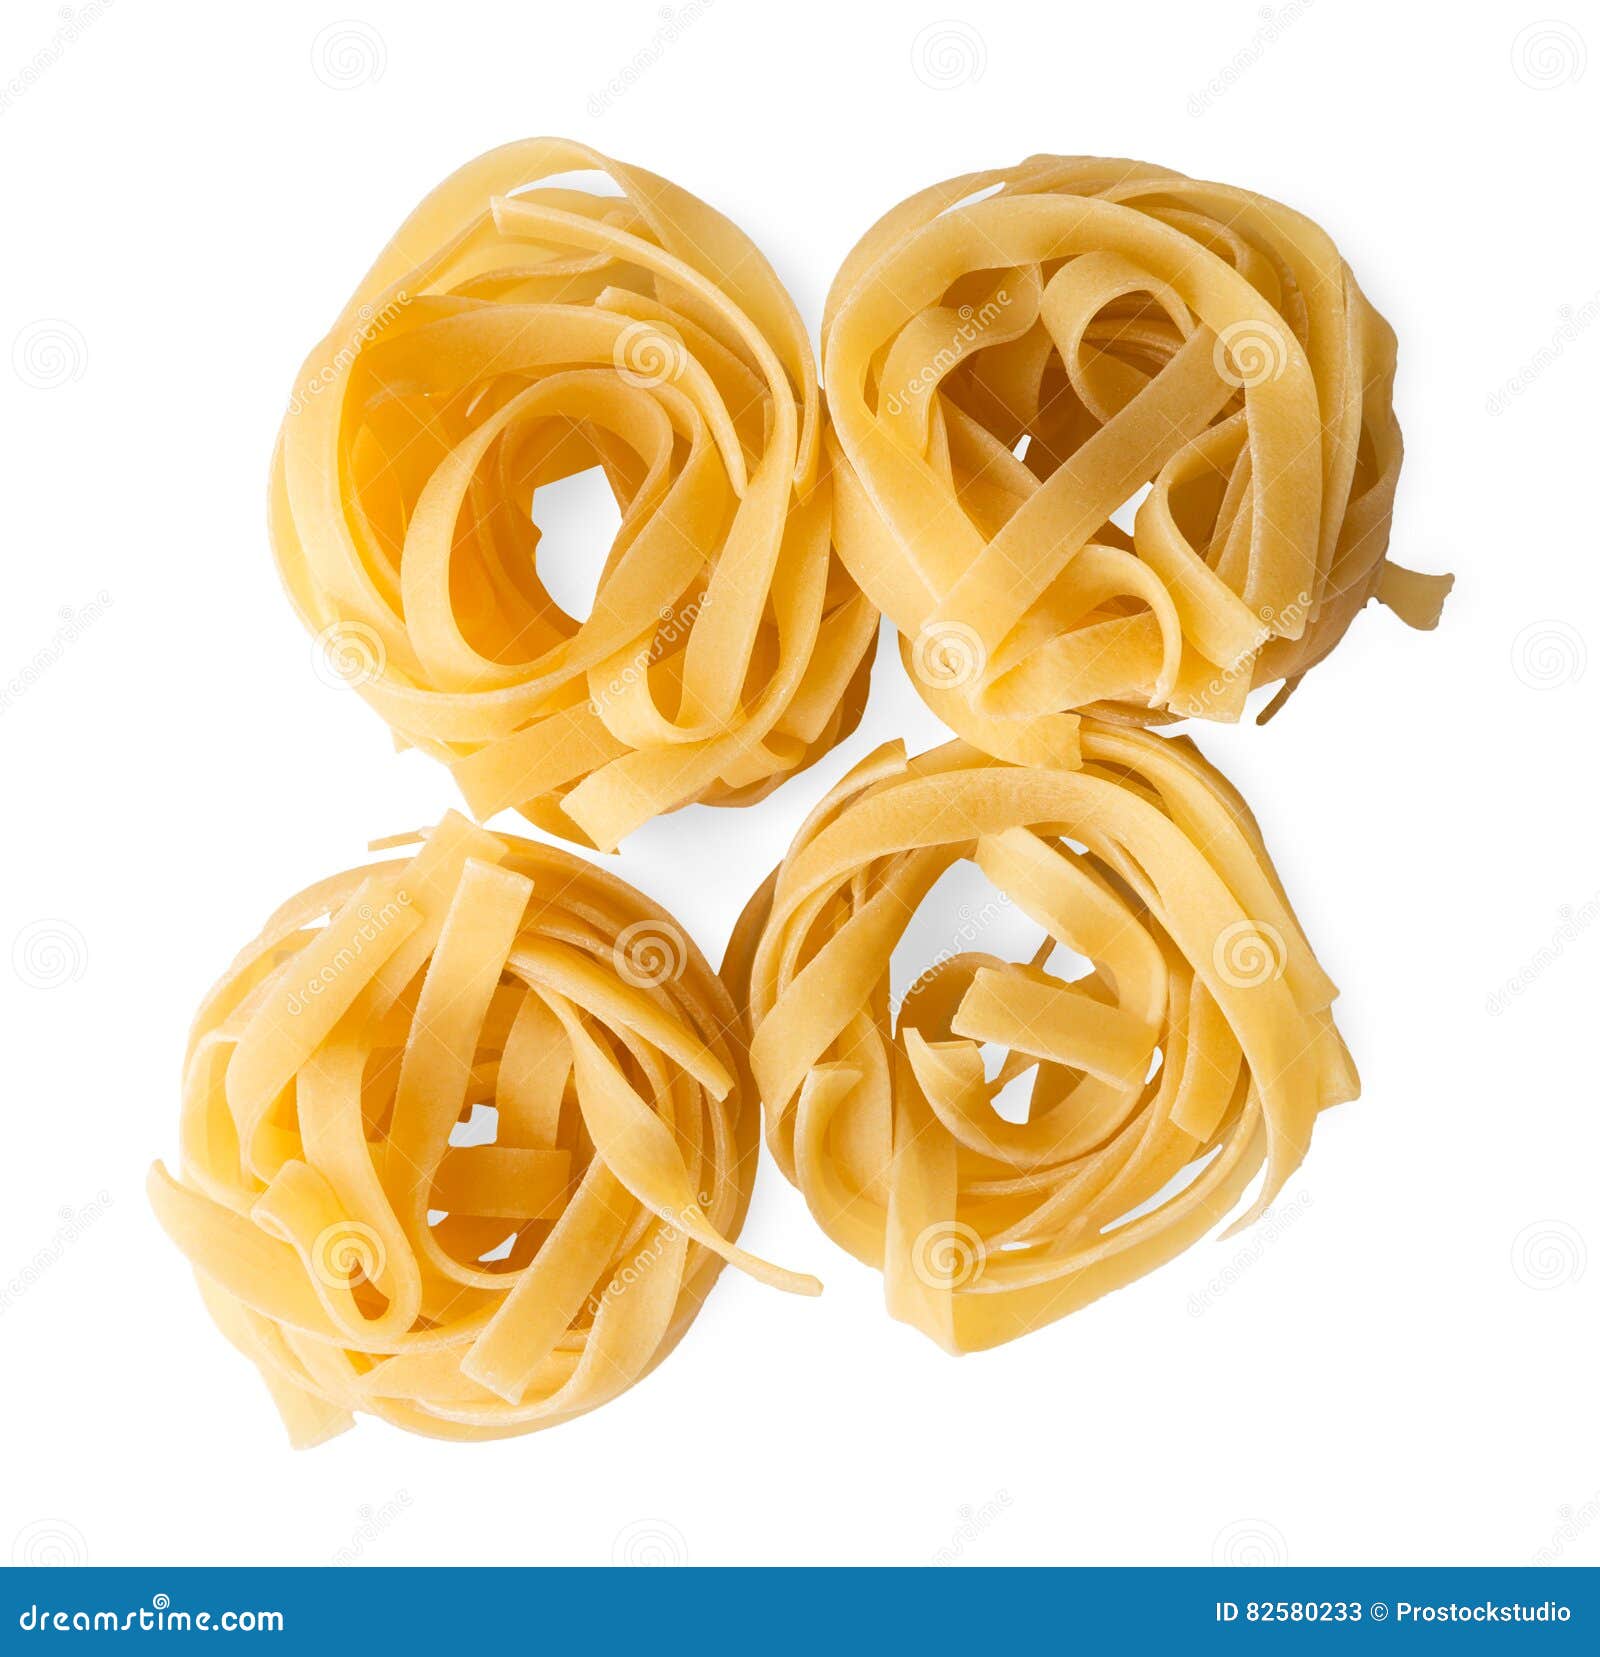 Italian Fettuccine Or Tagliatelle Pasta Nests Isolated On ...